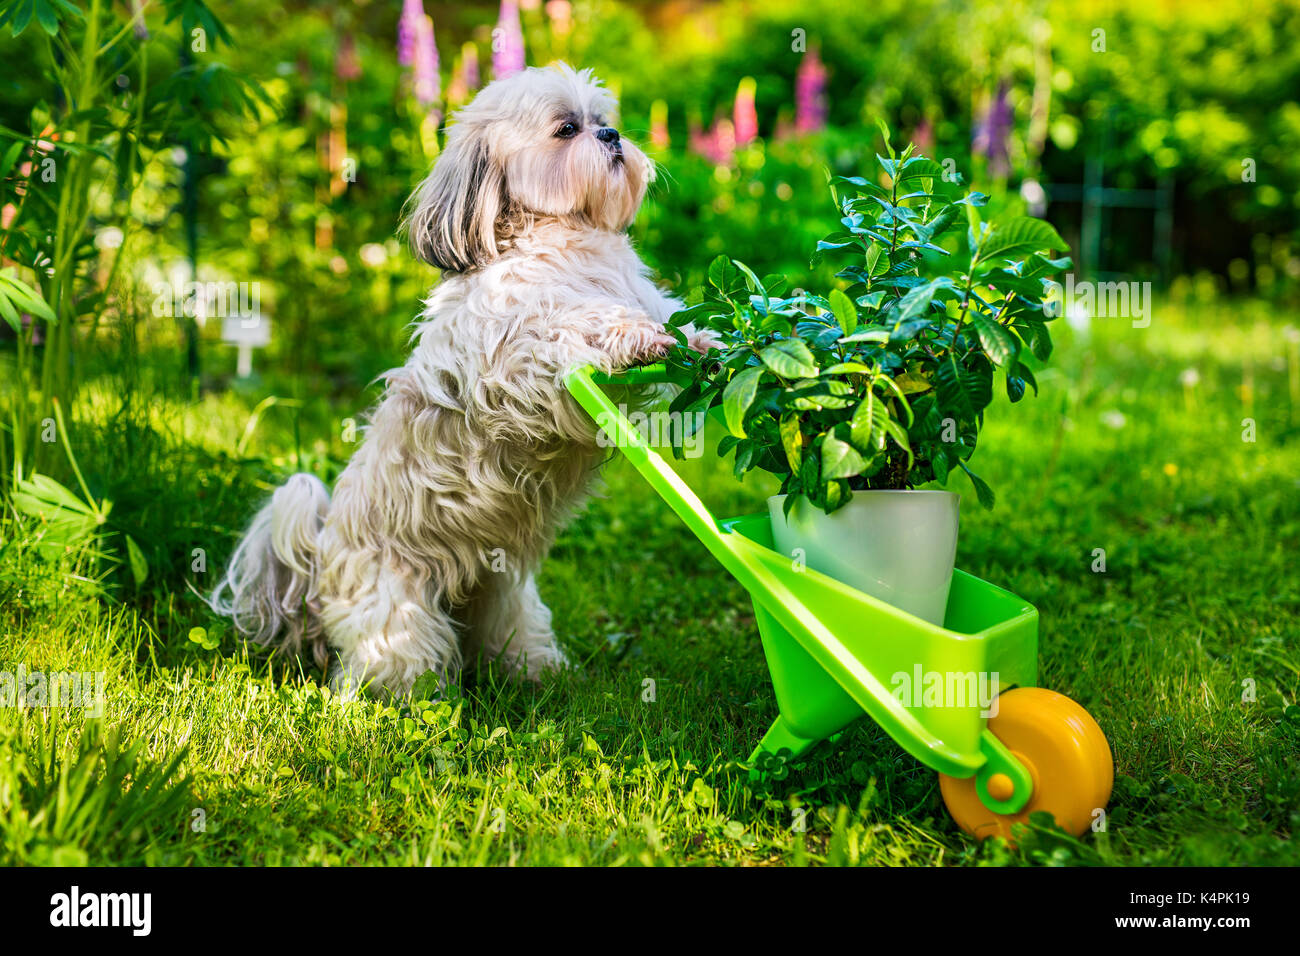 Cute shih tzu dog in summer garden with wheelbarrow and plant Stock Photo